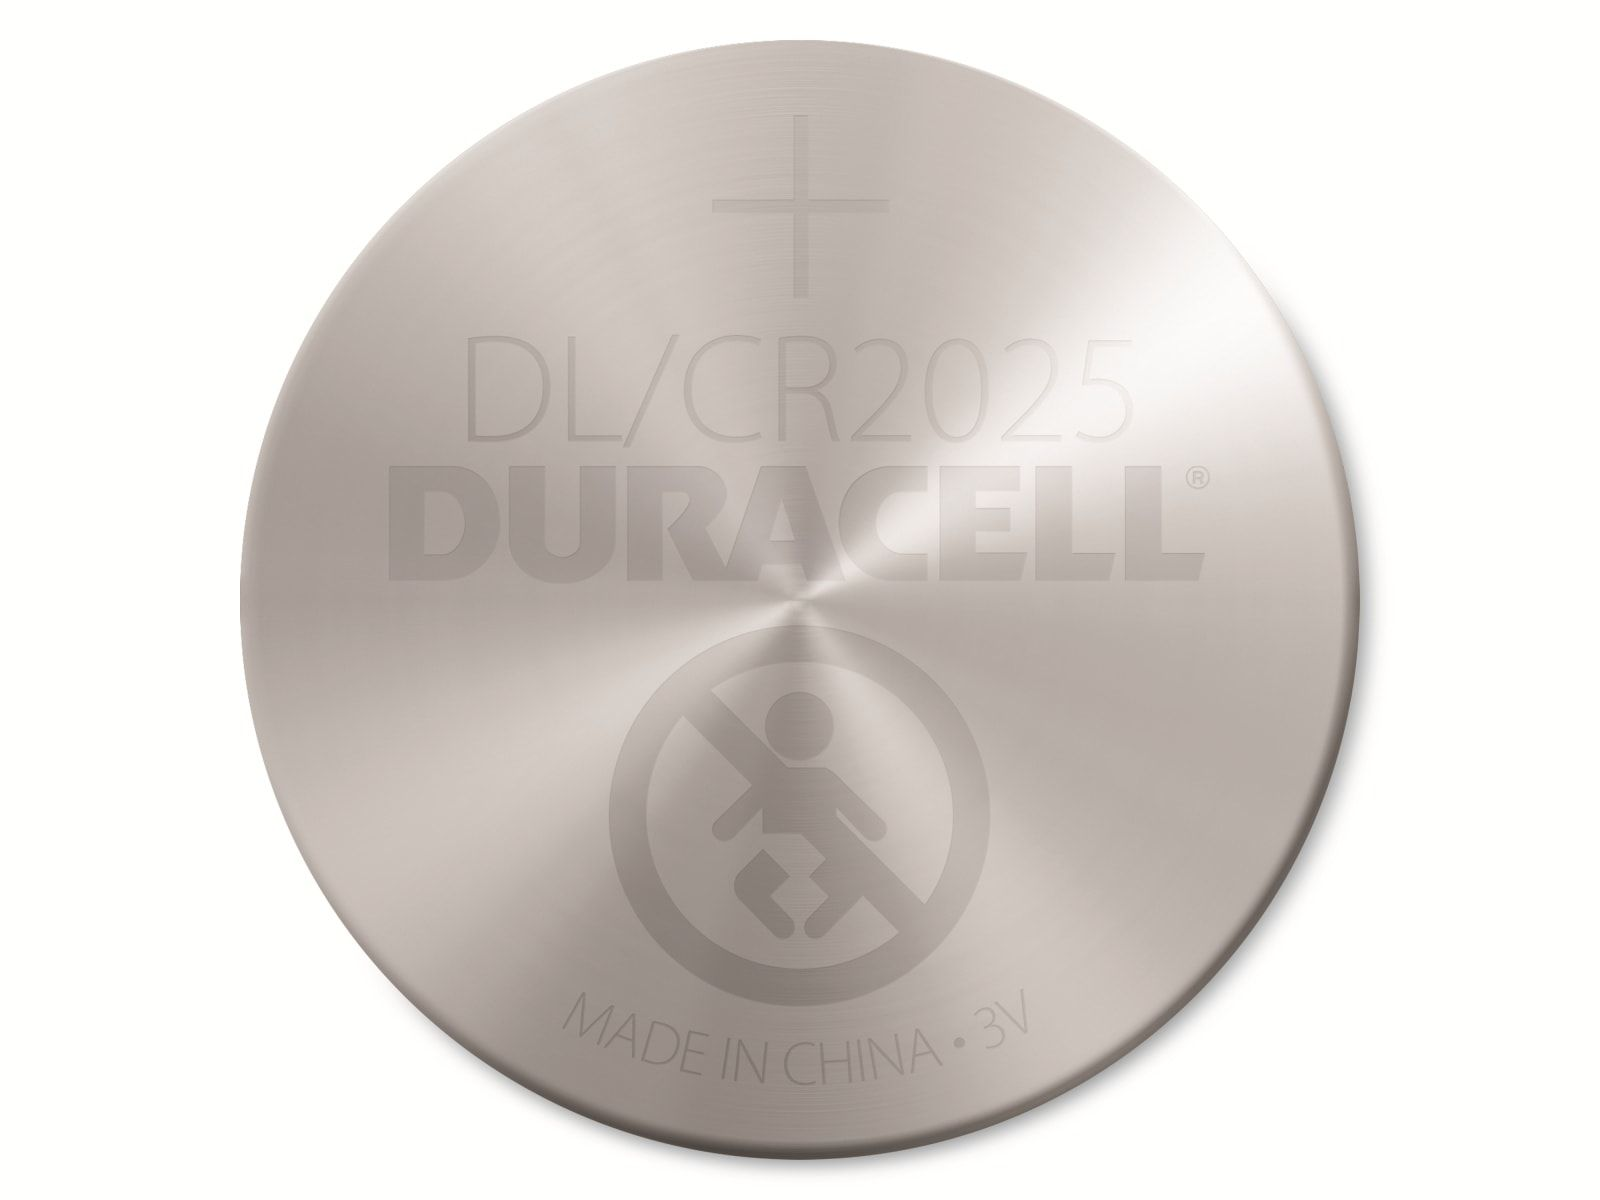 DURACELL Lithium-Knopfzelle CR2025, 3V, 5 Lithium Stück Batterien